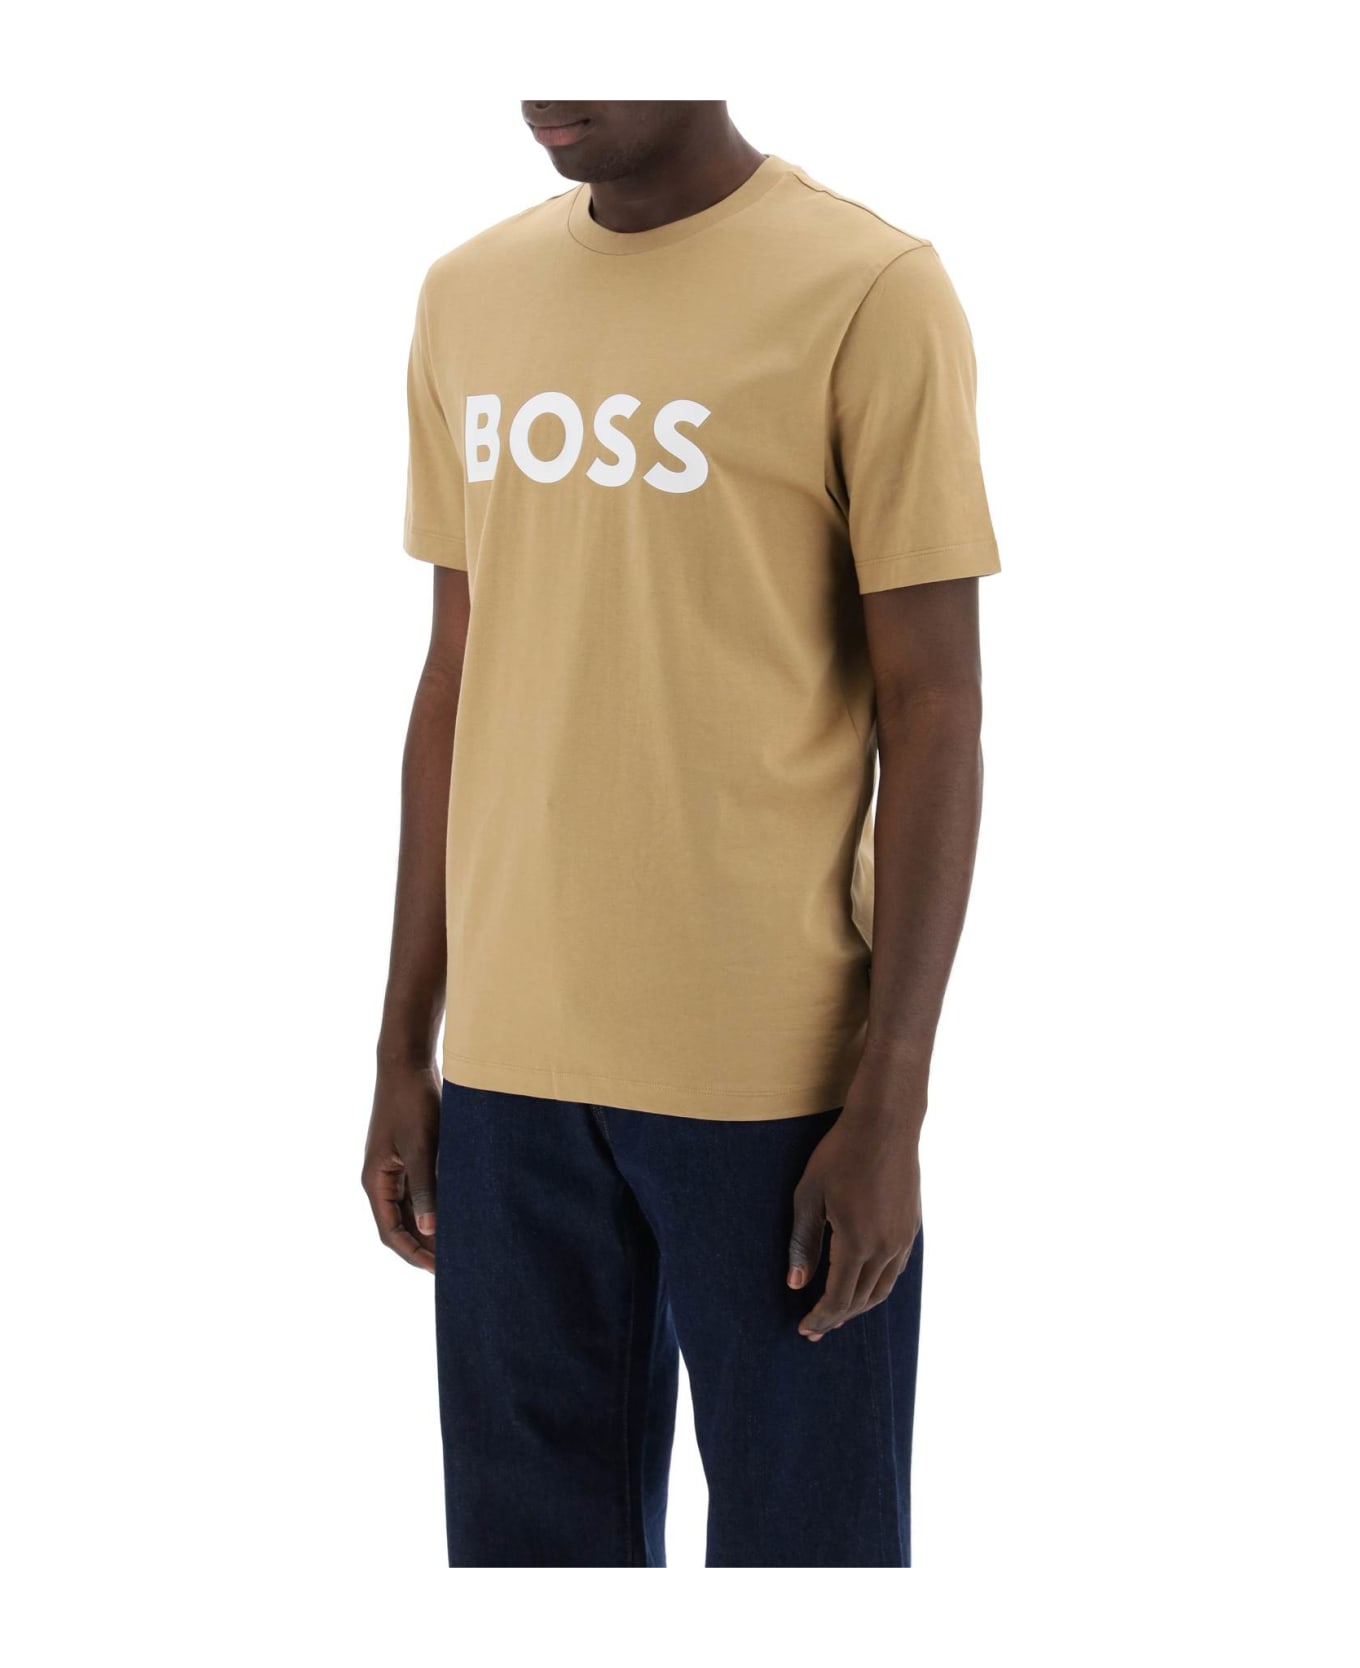 Hugo Boss Tiburt 354 Logo Print T-shirt - MEDIUM BEIGE (Beige)